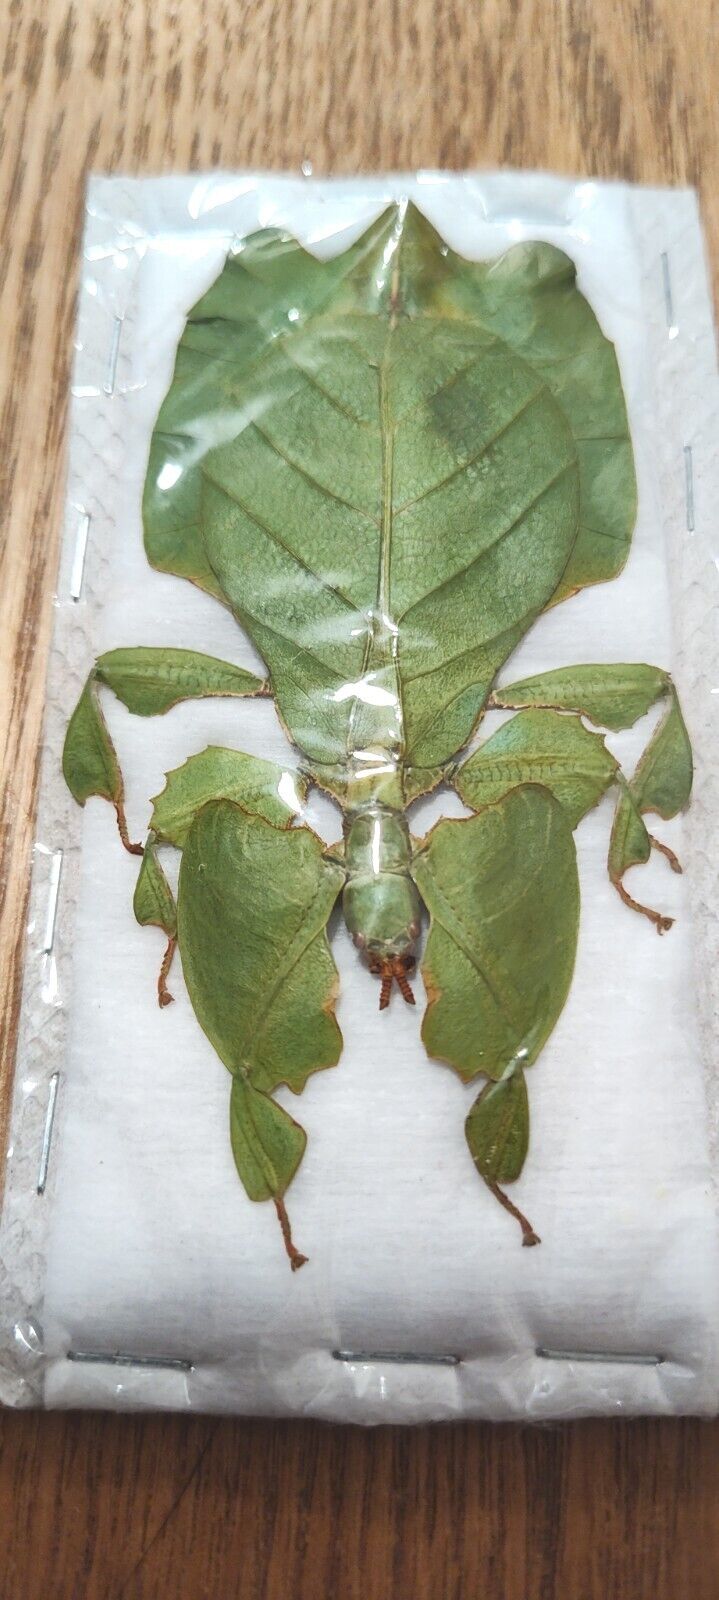 Phyllium pulchrifolium (FEMALE) Real walking leaf stick bug green indonesian...